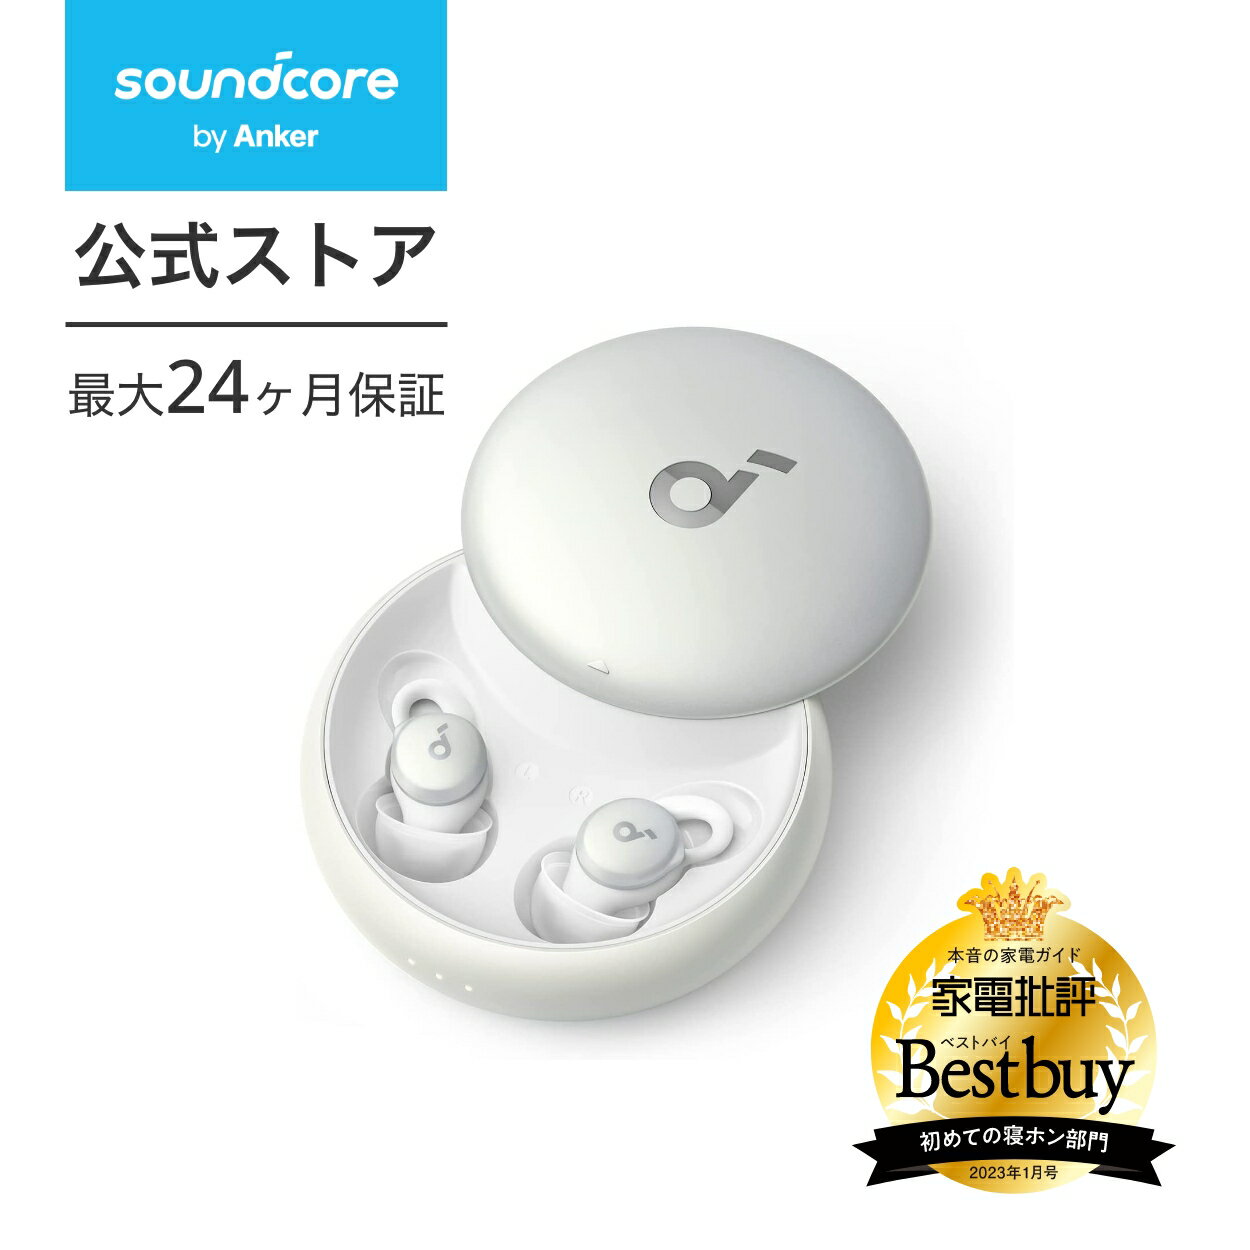 Anker Soundcore Sleep A10 （ワイヤレスイヤホン Bluetooth 5.2）【完全ワイヤレスイヤホン / IPX4防水規格 / 最大47時間音楽再生 / 専用アプリ対応 / 睡眠時間のモニタリング / コンパクト / 軽量設計 / PSE技術基準適合】